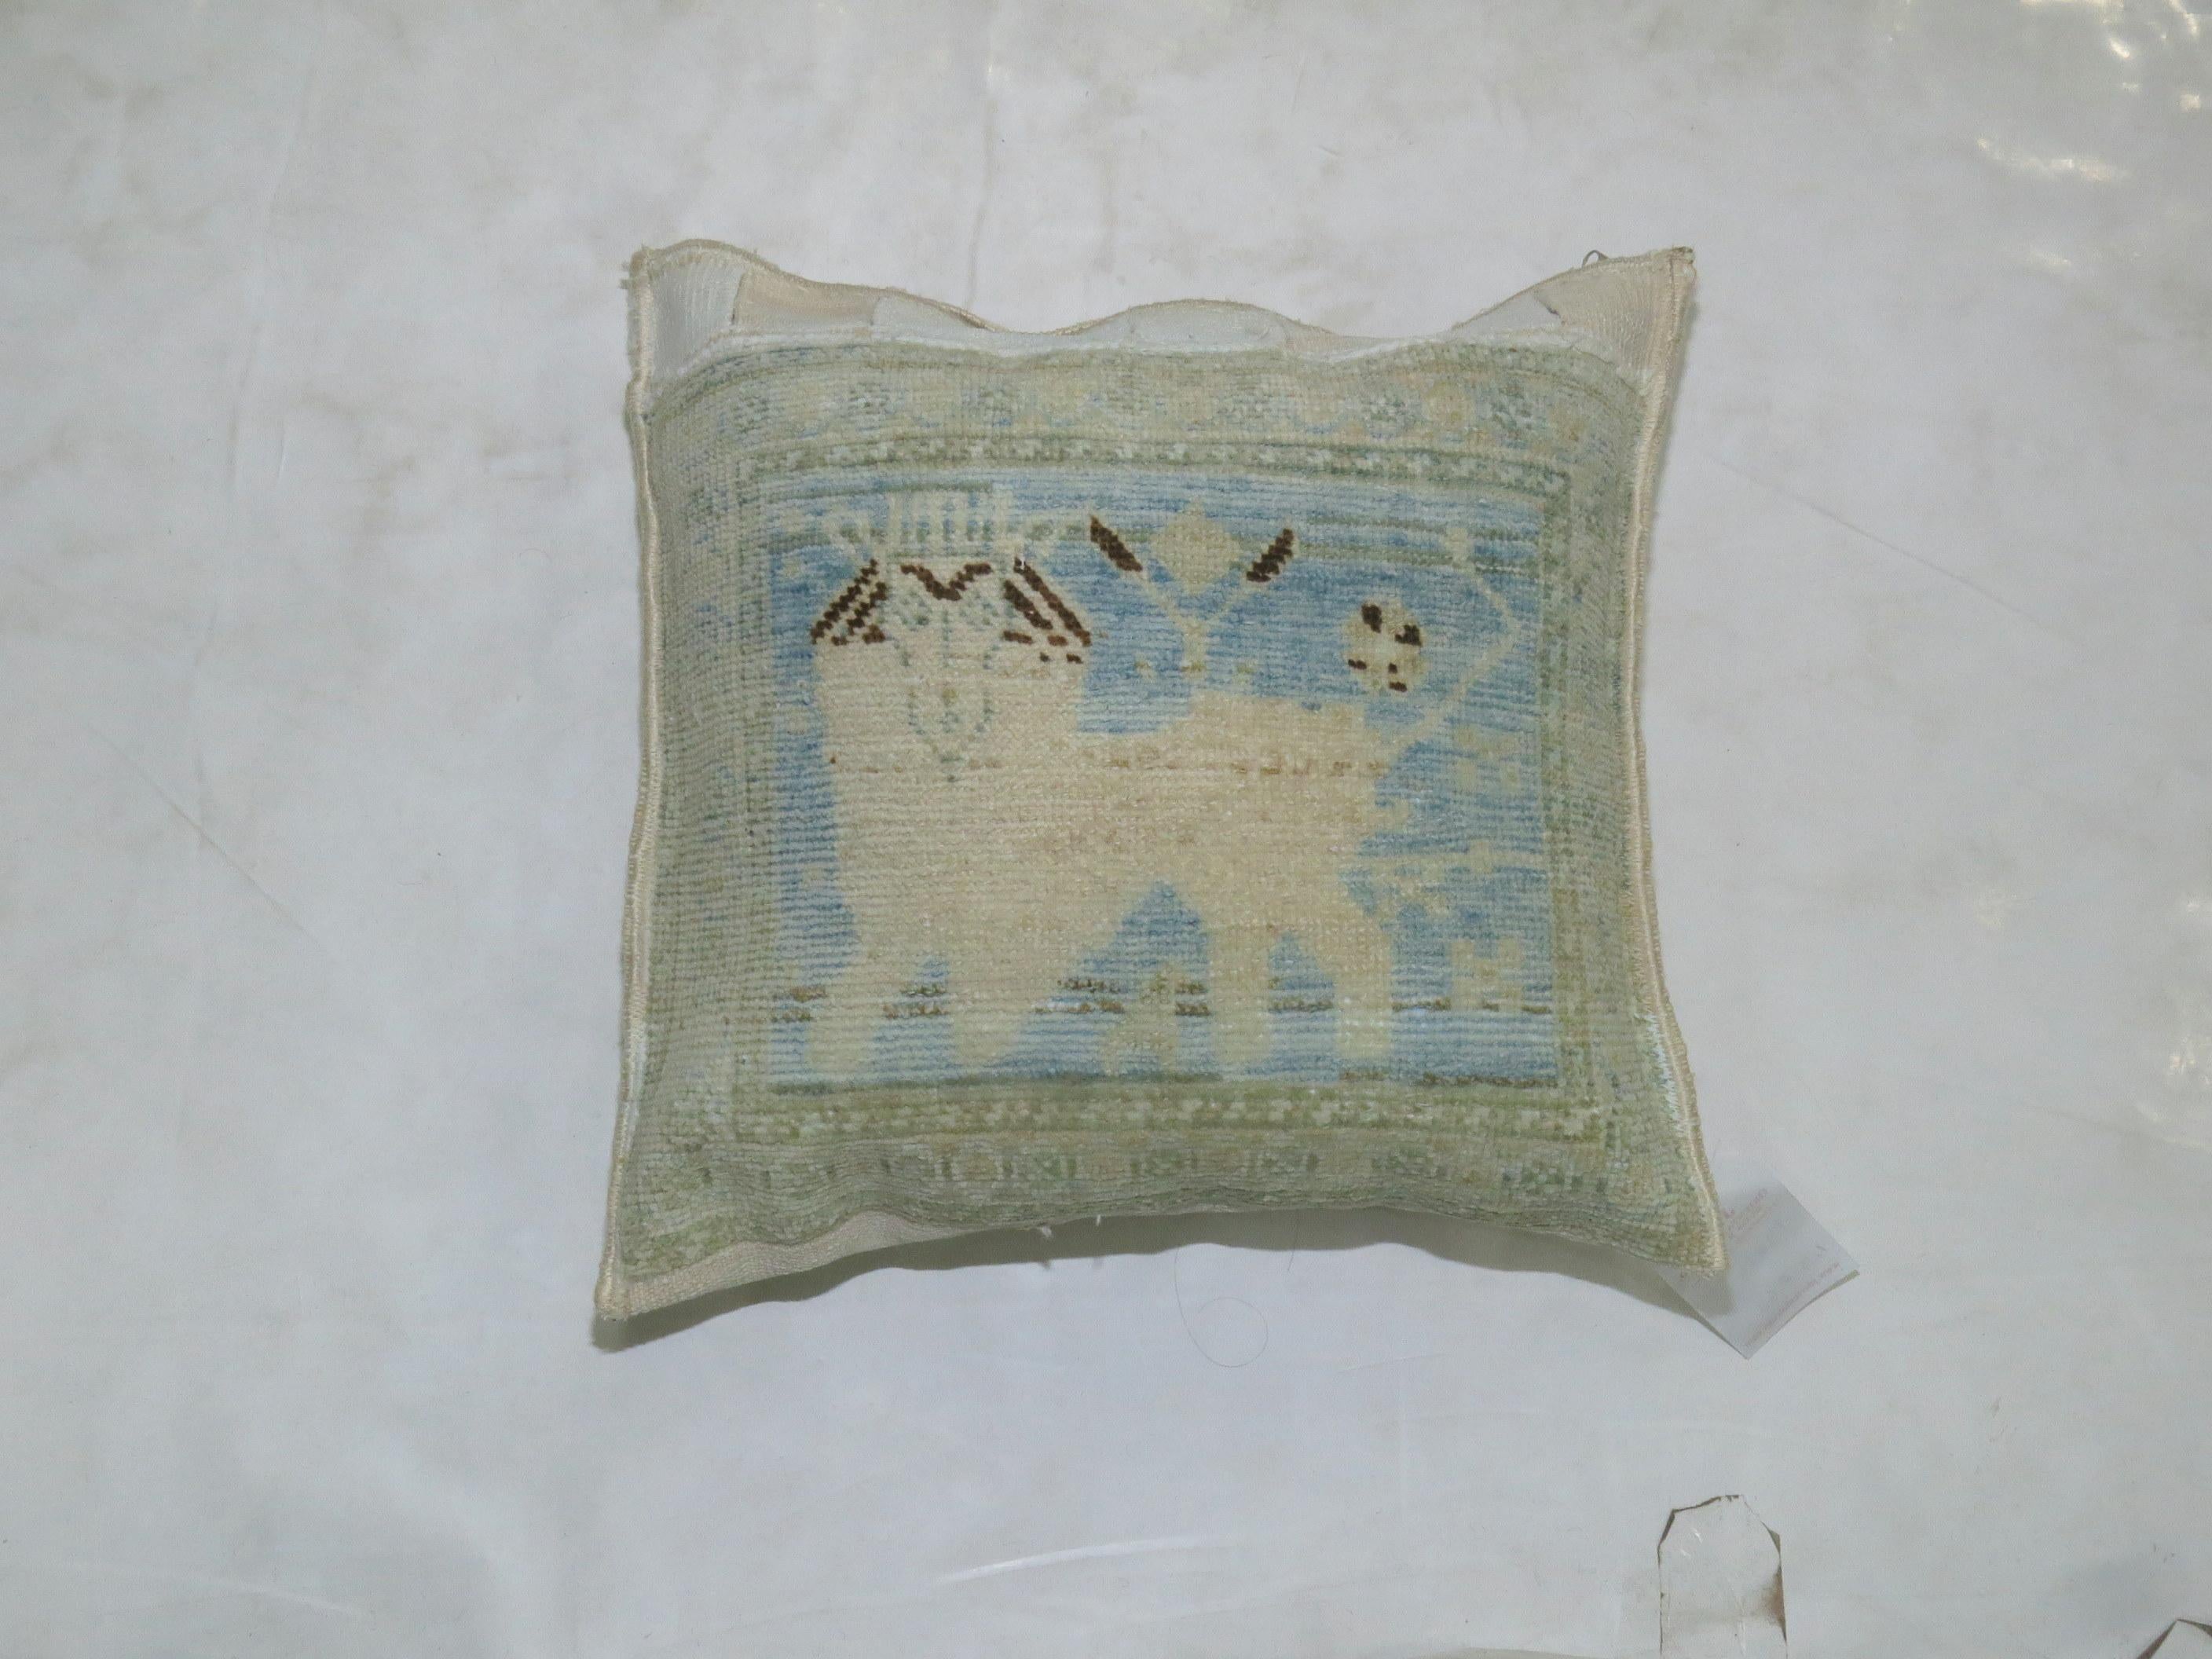 Pair of light blue Persian pillows depicting lions. Measuring 15